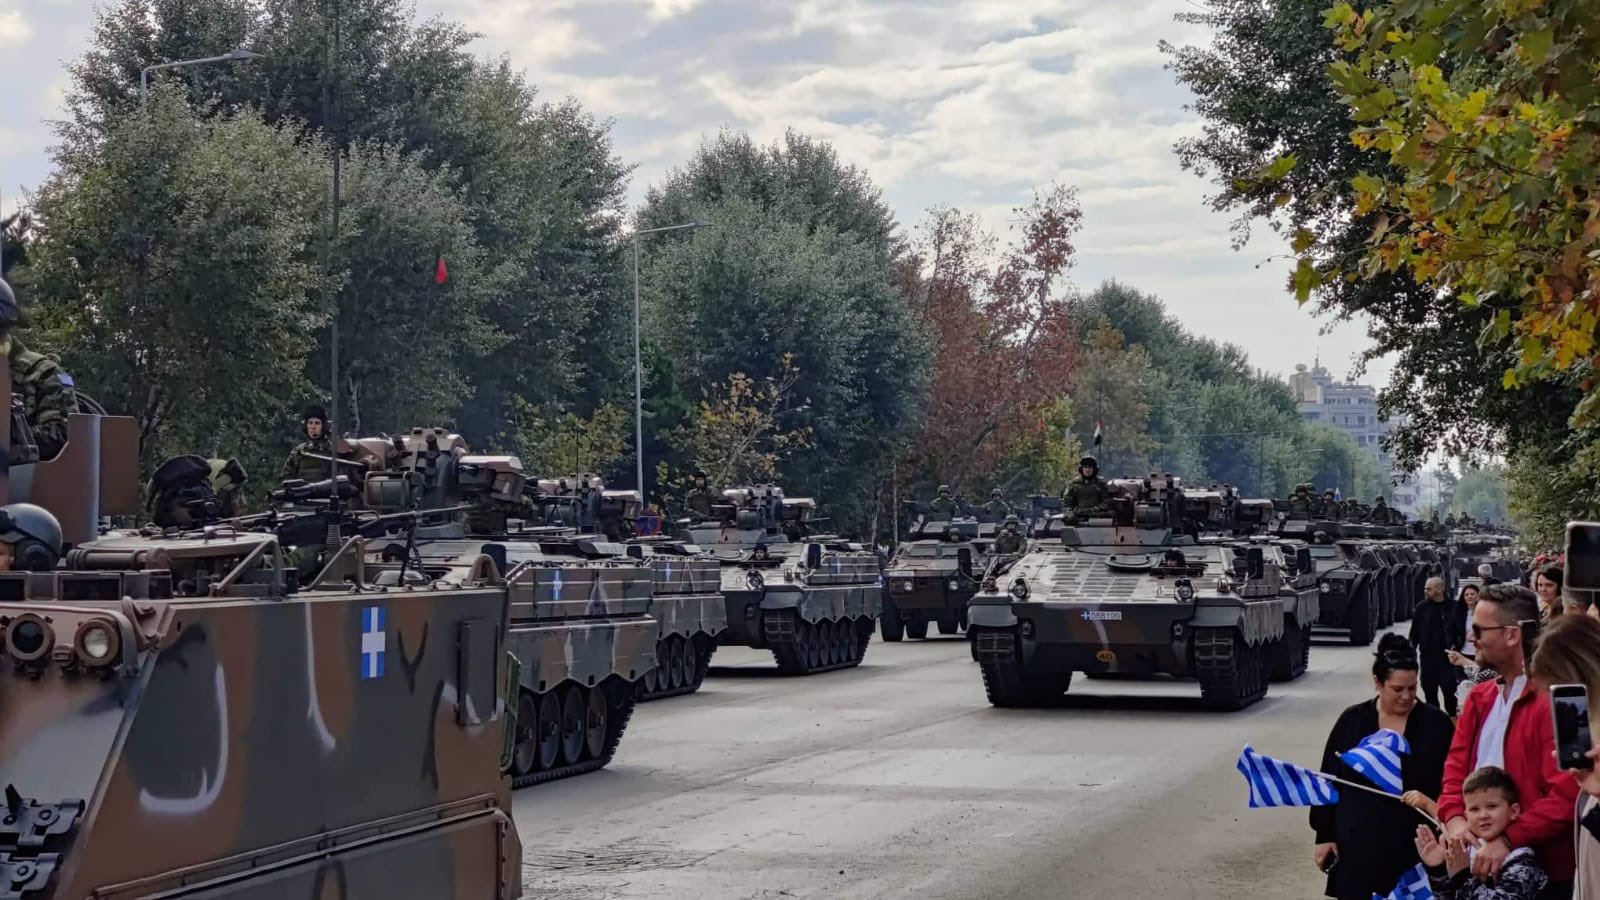 Rheinmetall supplies Marder Infantry Fighting Vehicles to Greece